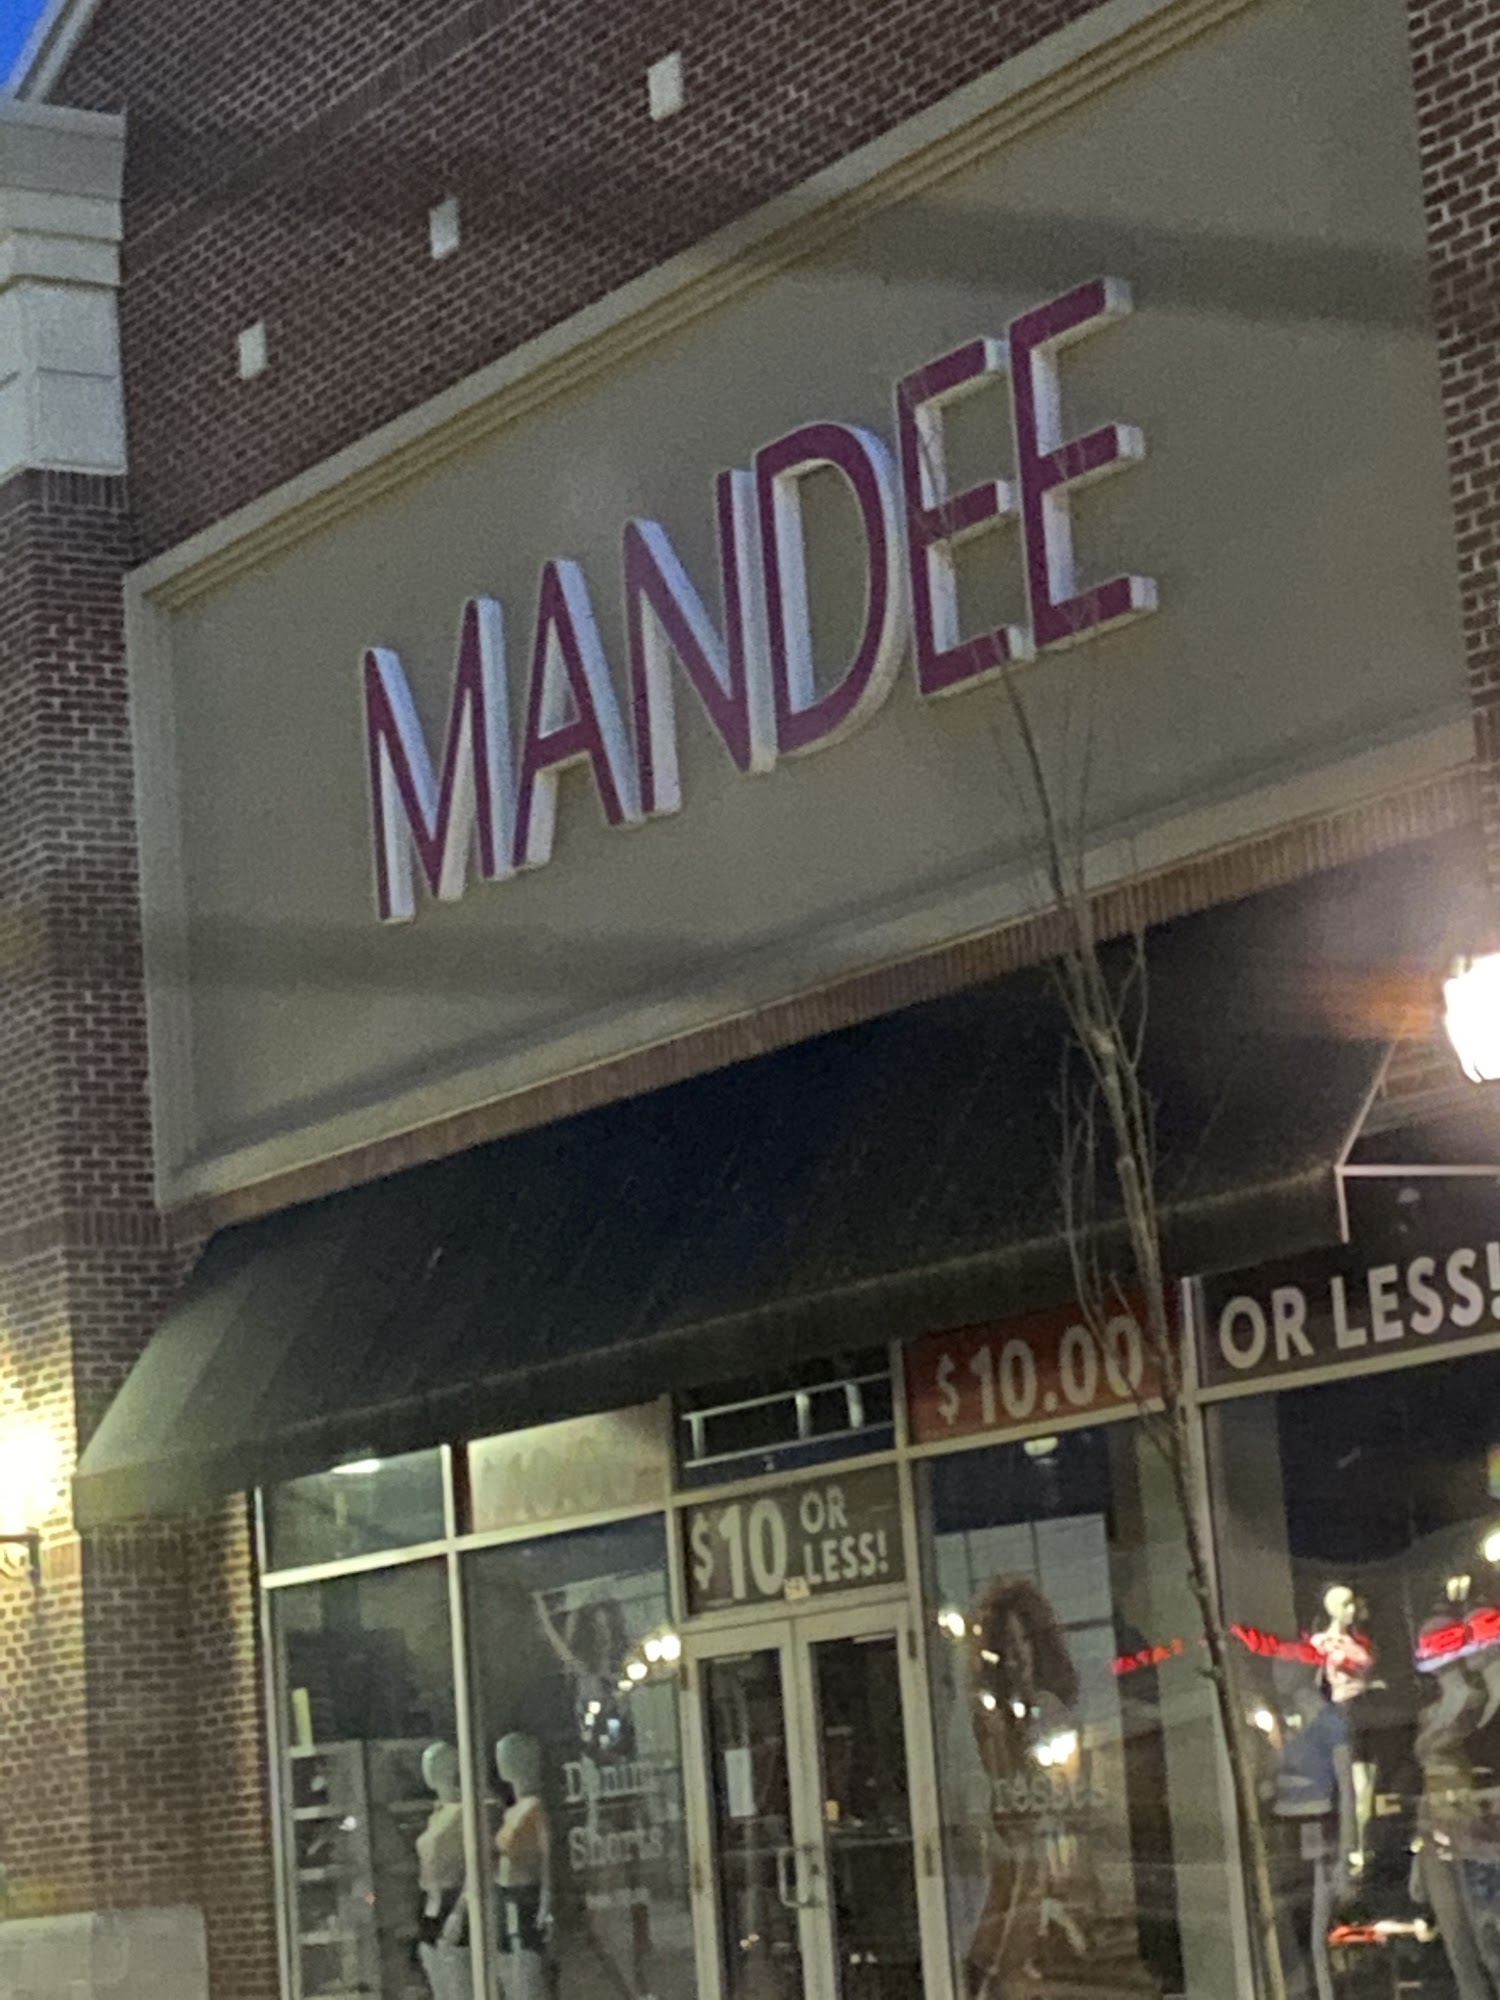 Mandee